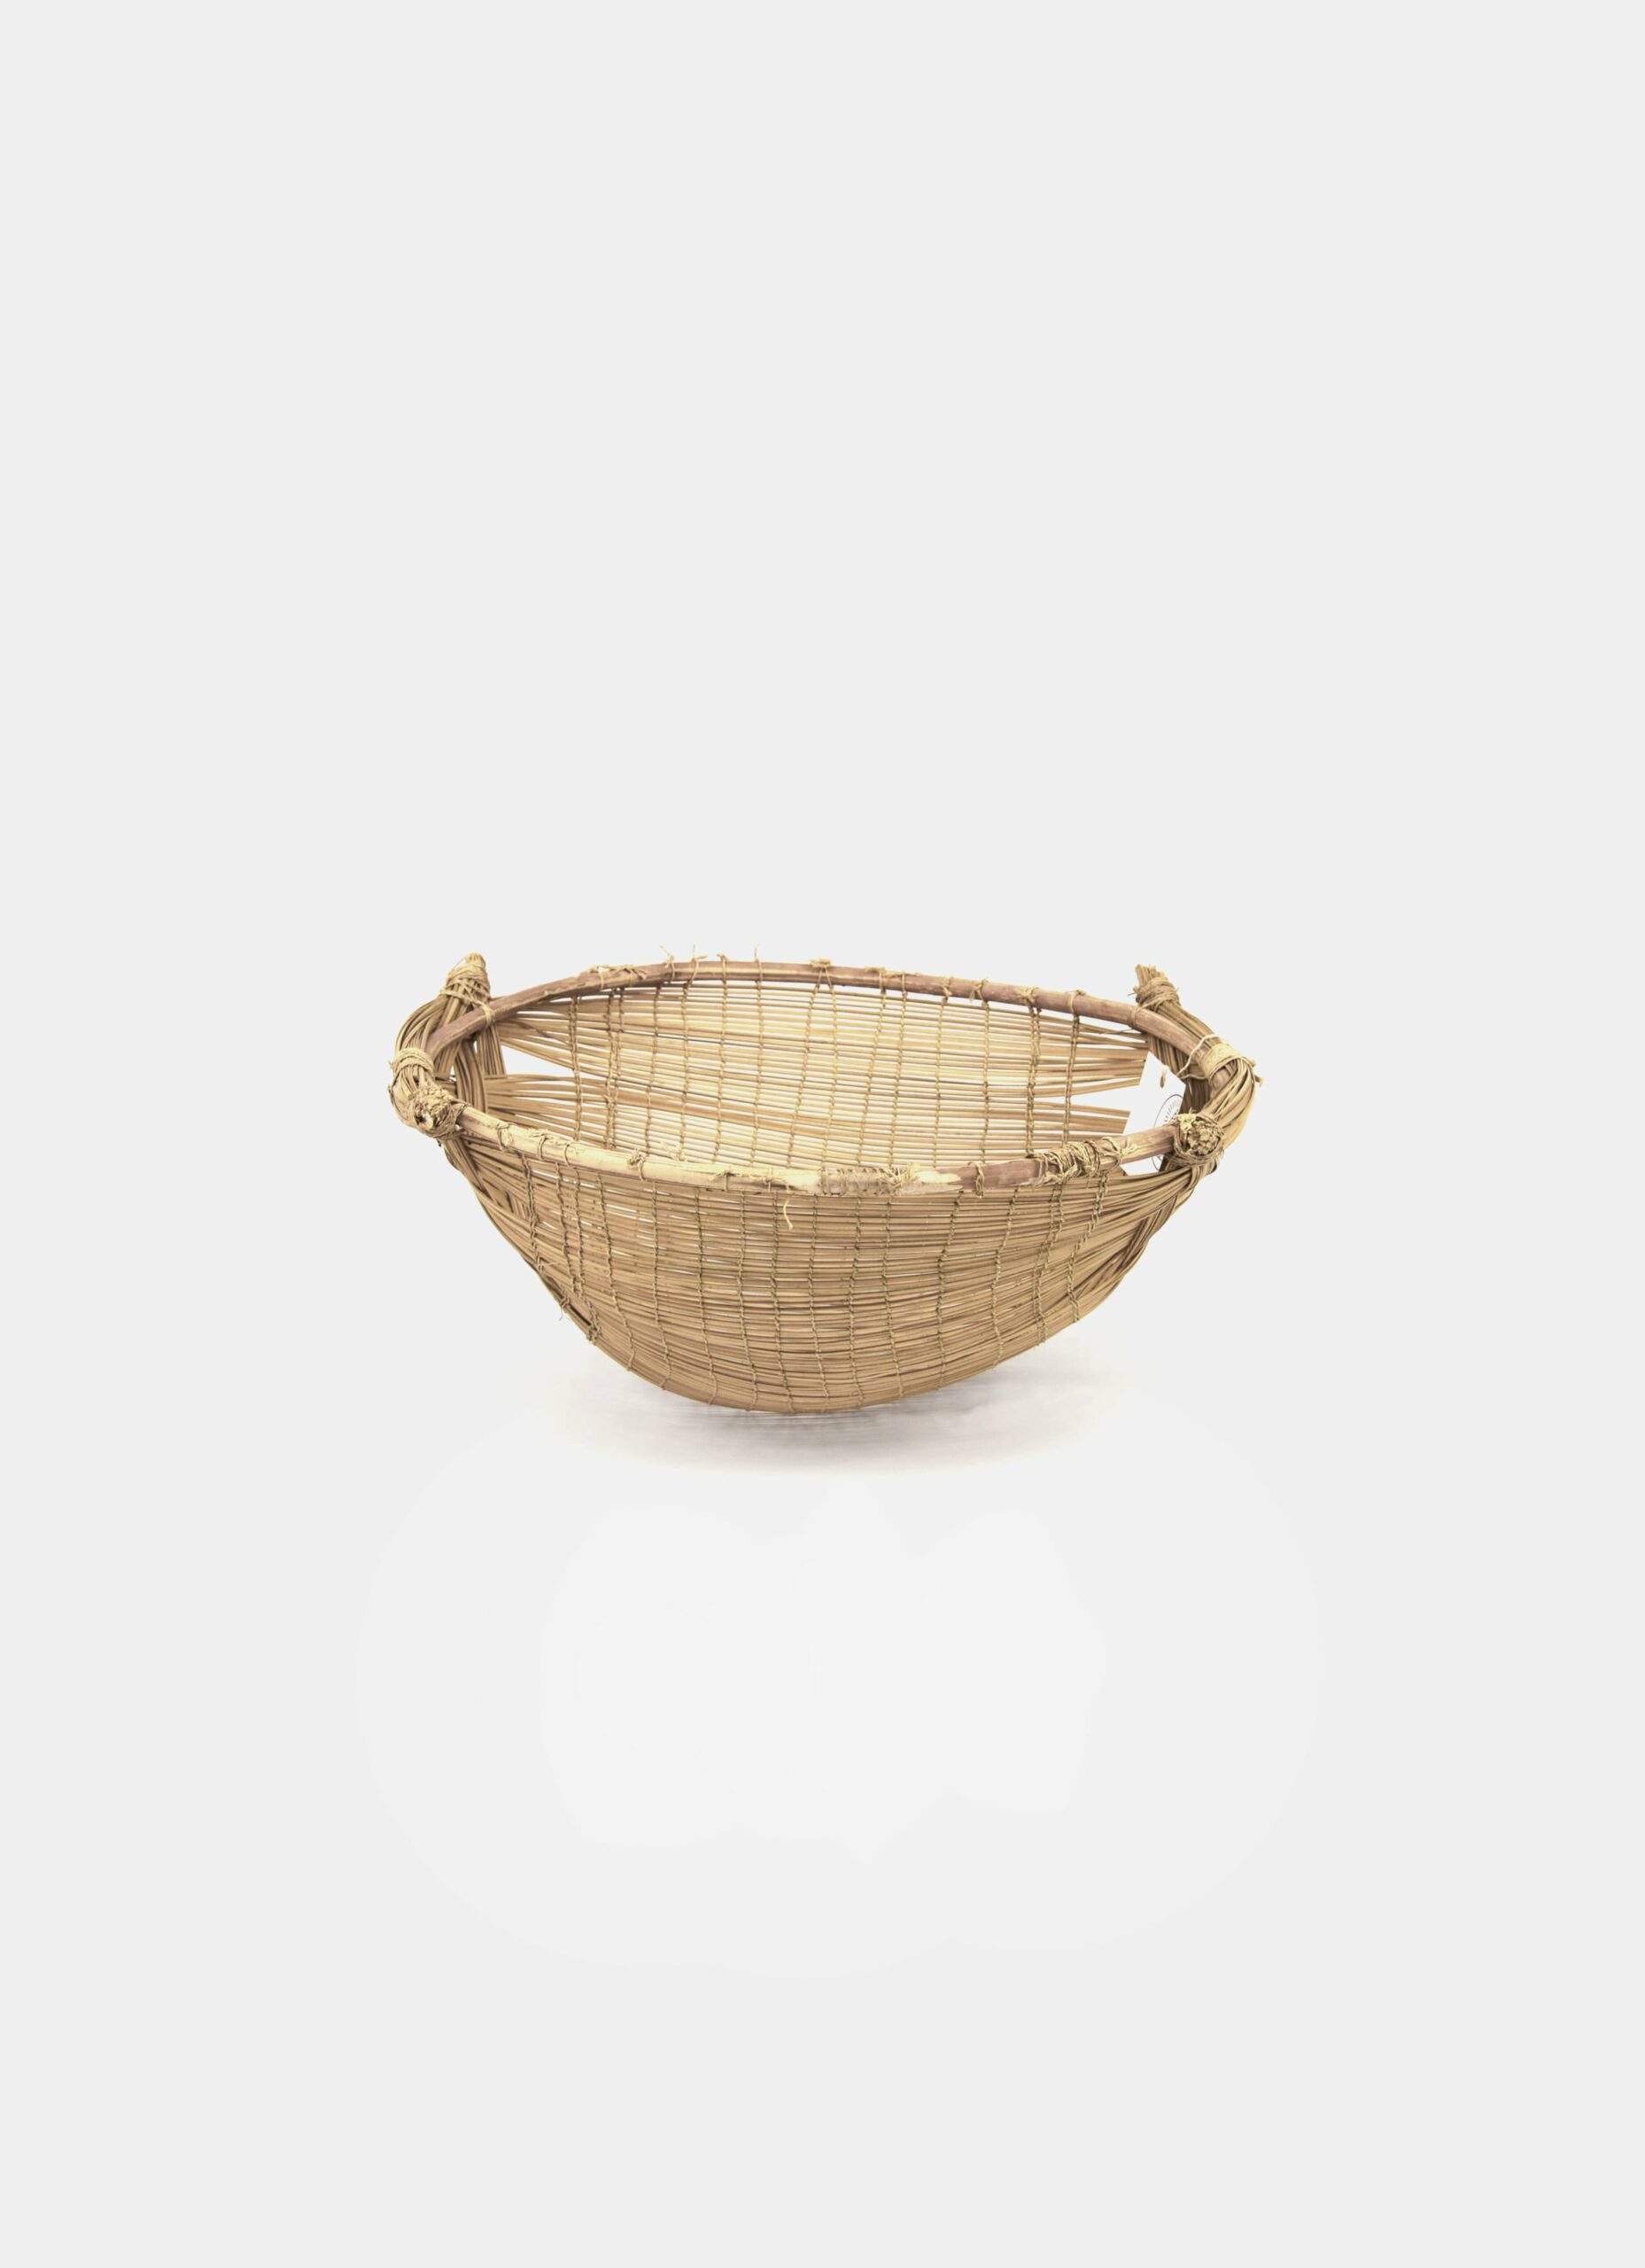 Incausa - Mehinako People - Traditional Fishing Basket - M